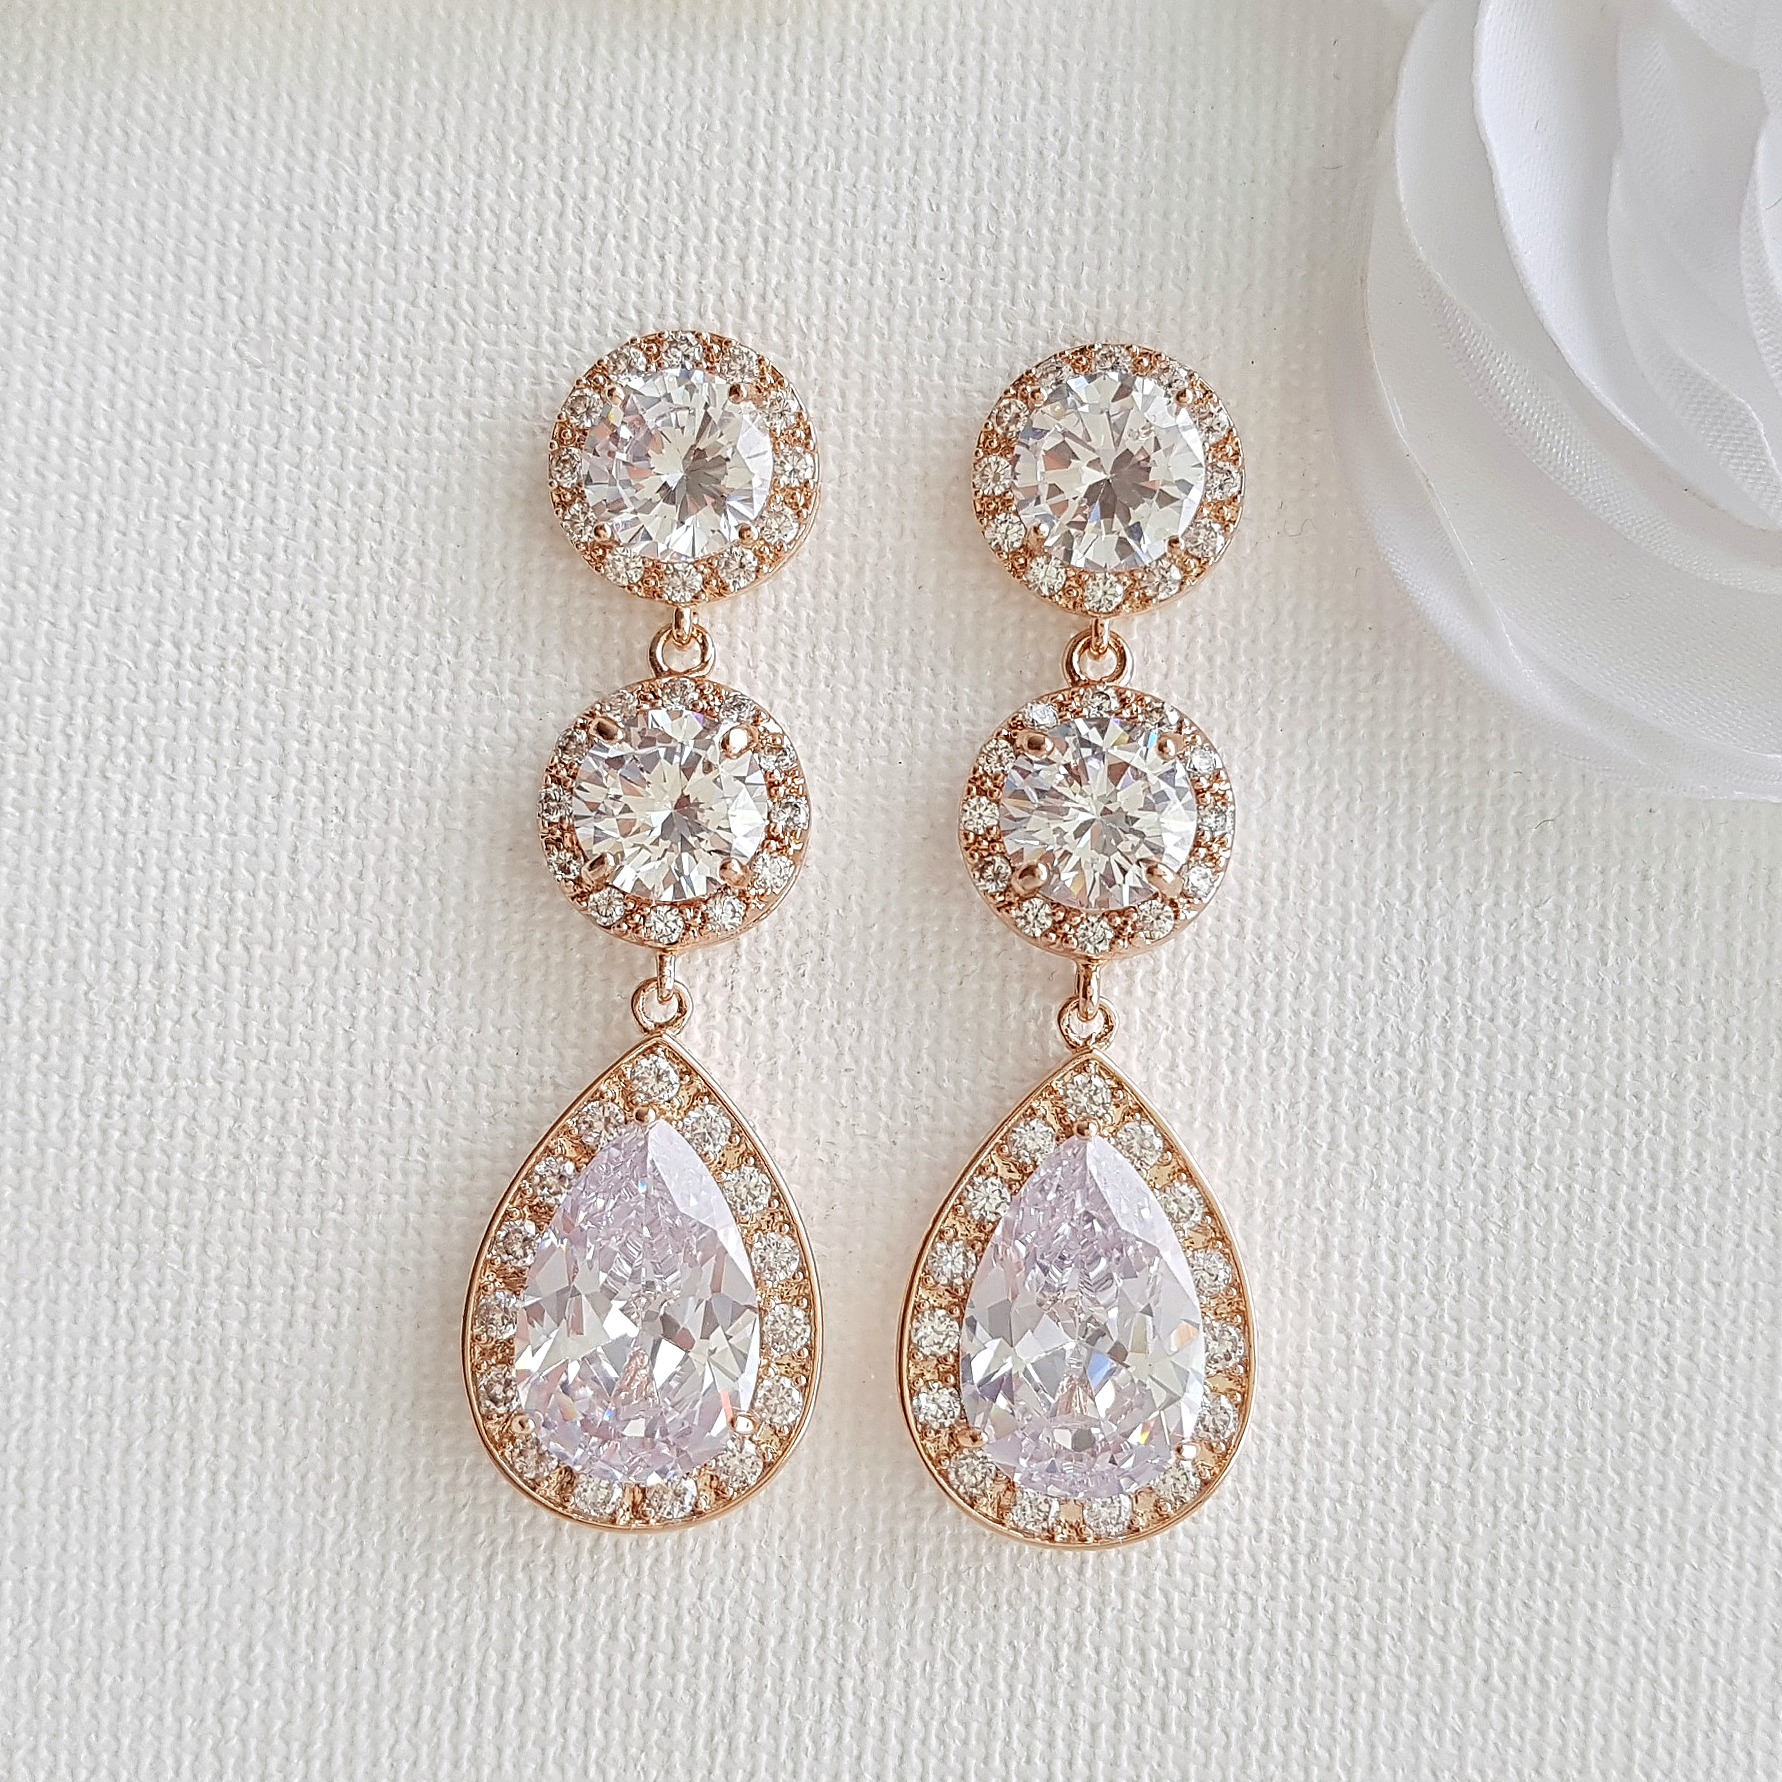 Crystal Bridal Earrings Long Wedding Earrings Halo Style | Etsy